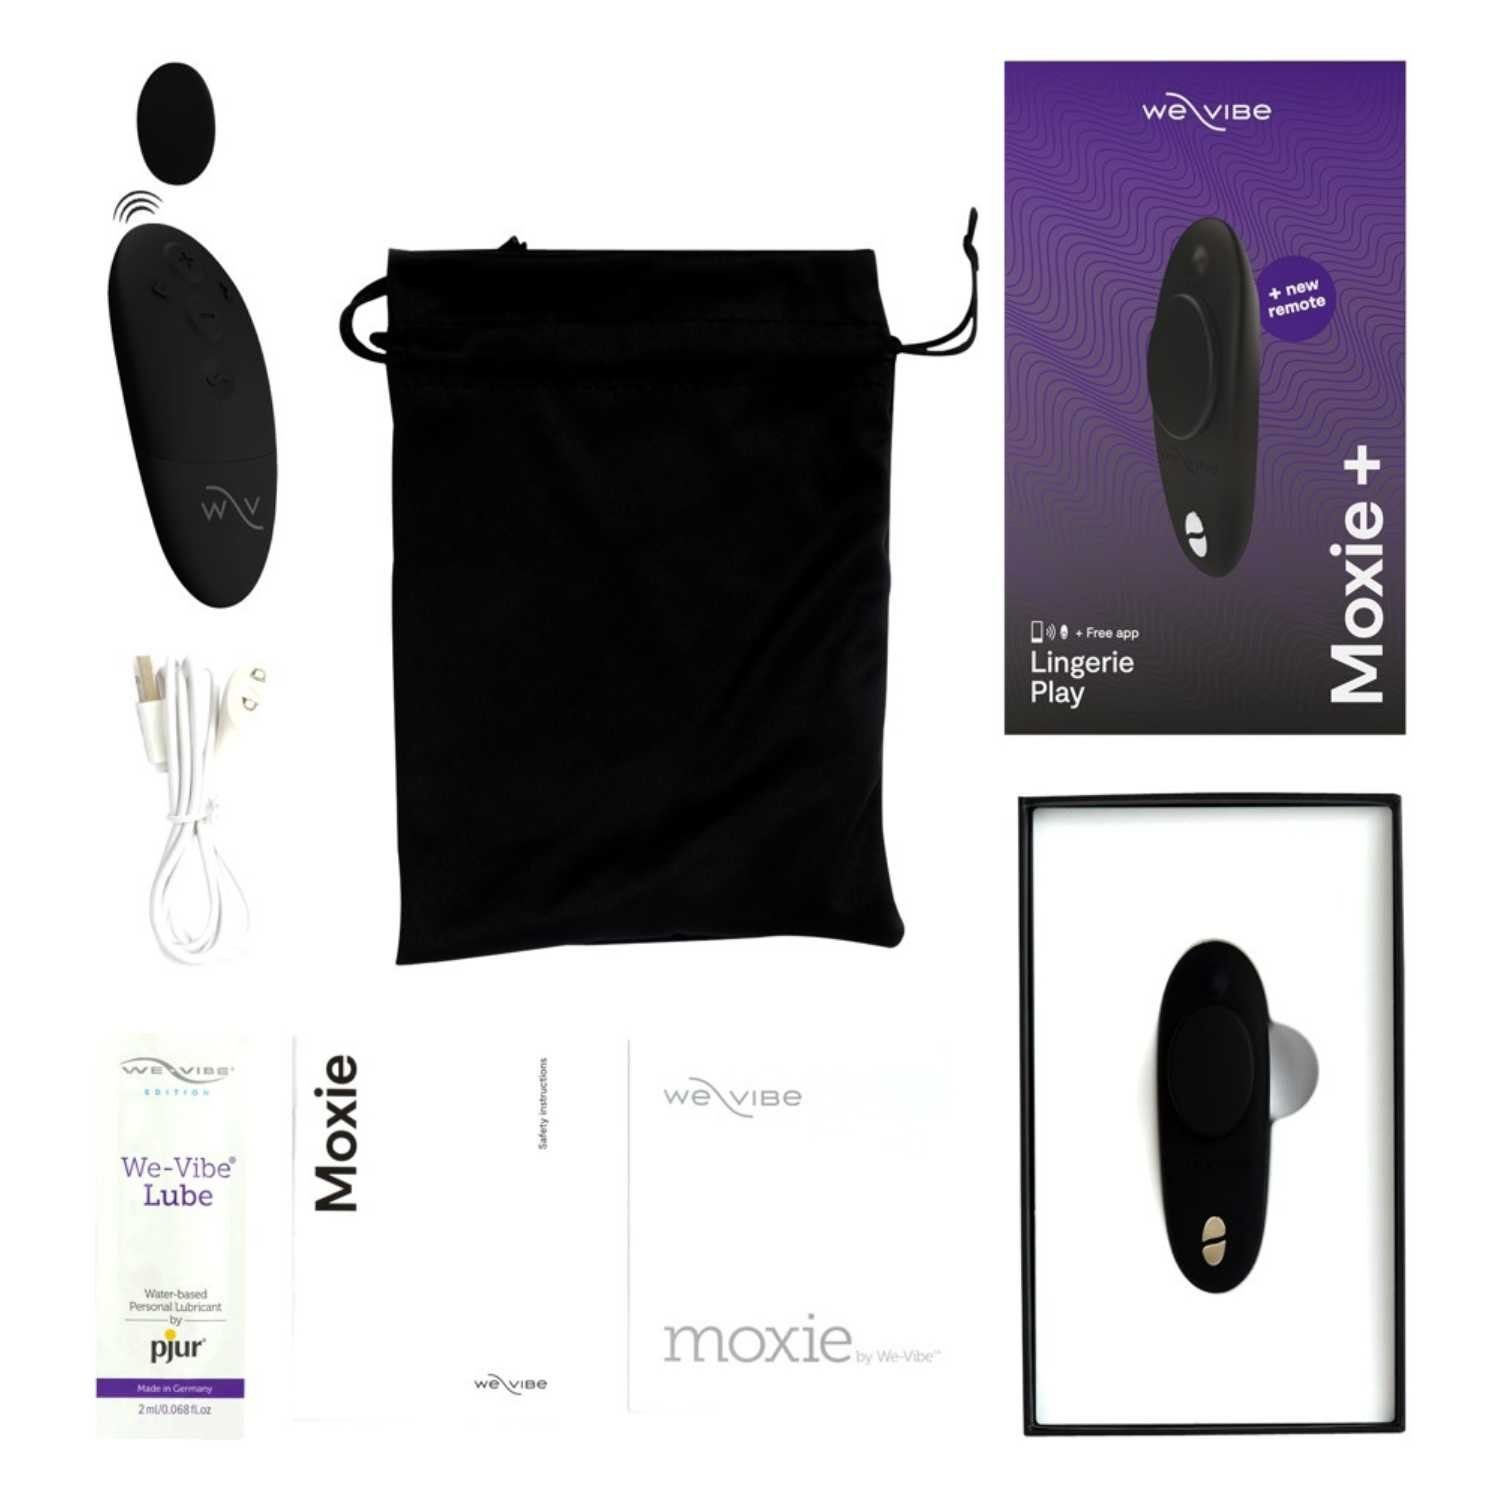 We Vibe Vibe schwarz wasserdicht,ferngesteuert,App gesteuert Moxie Slip-Vibrator We +,